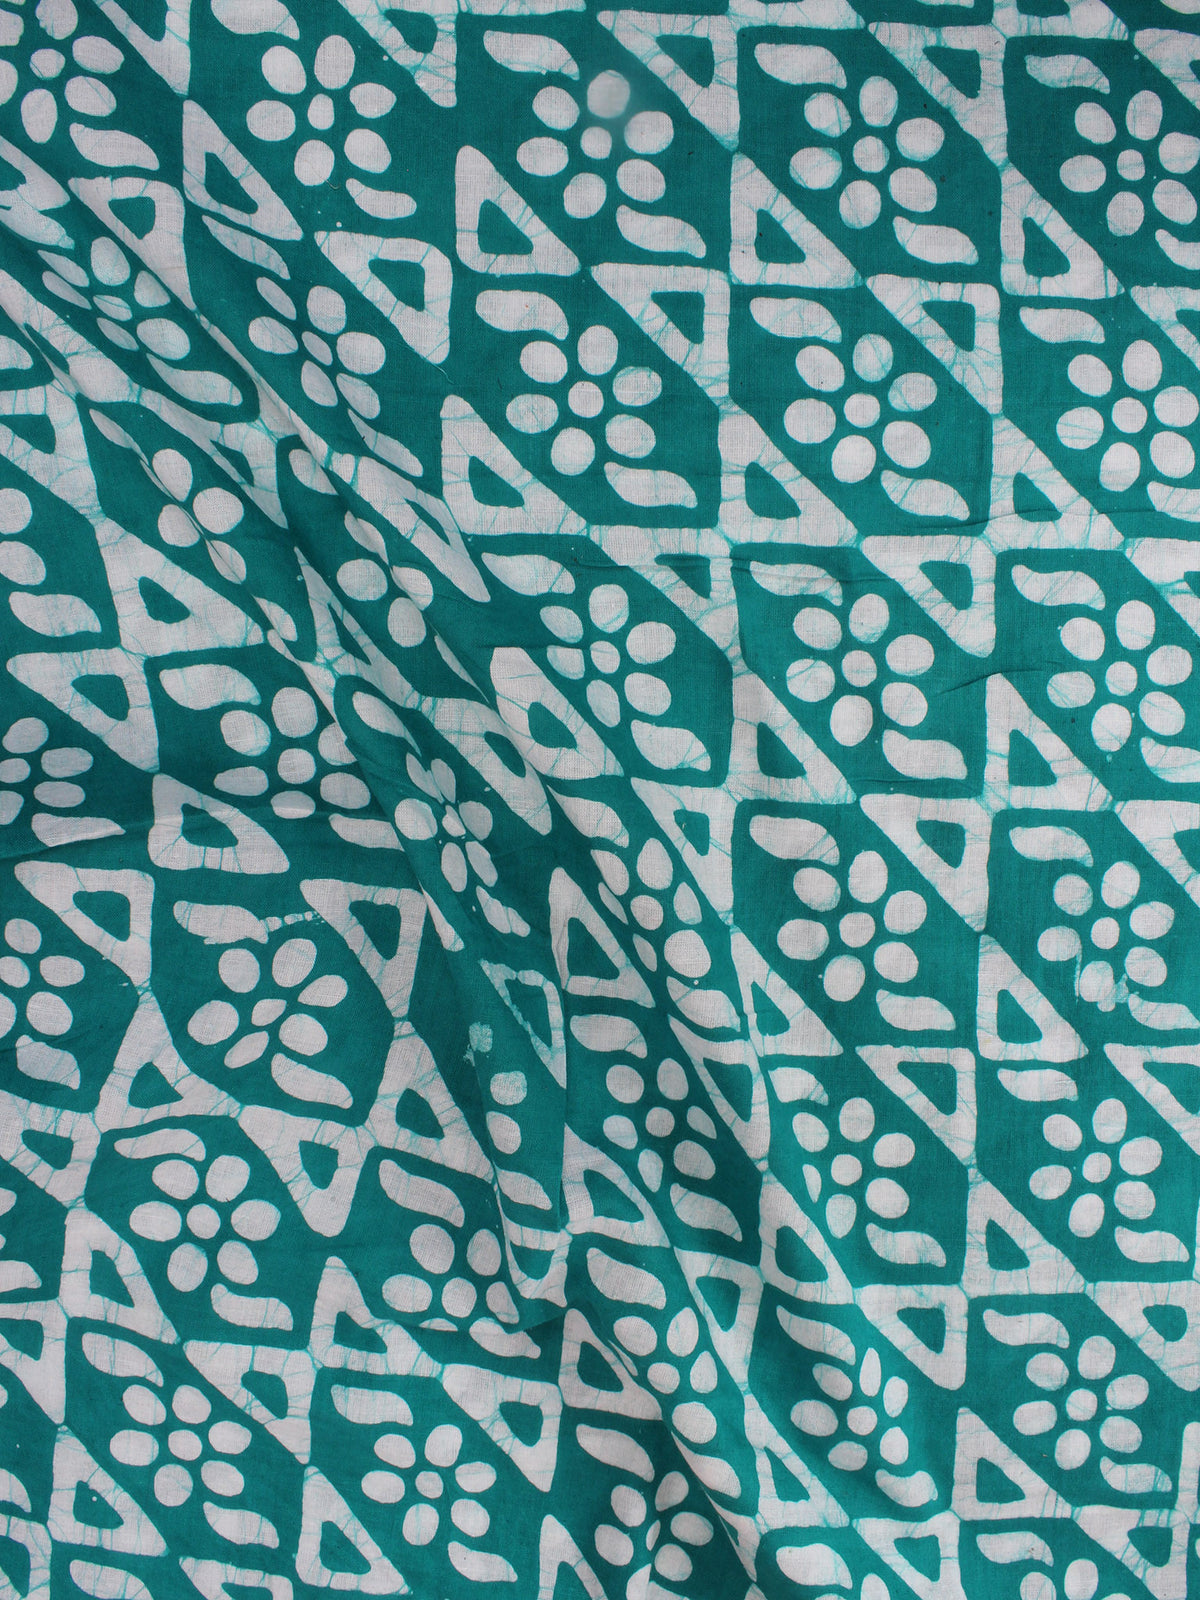 Green White Hand Block Printed Cotton Fabric Per Meter - F0916321